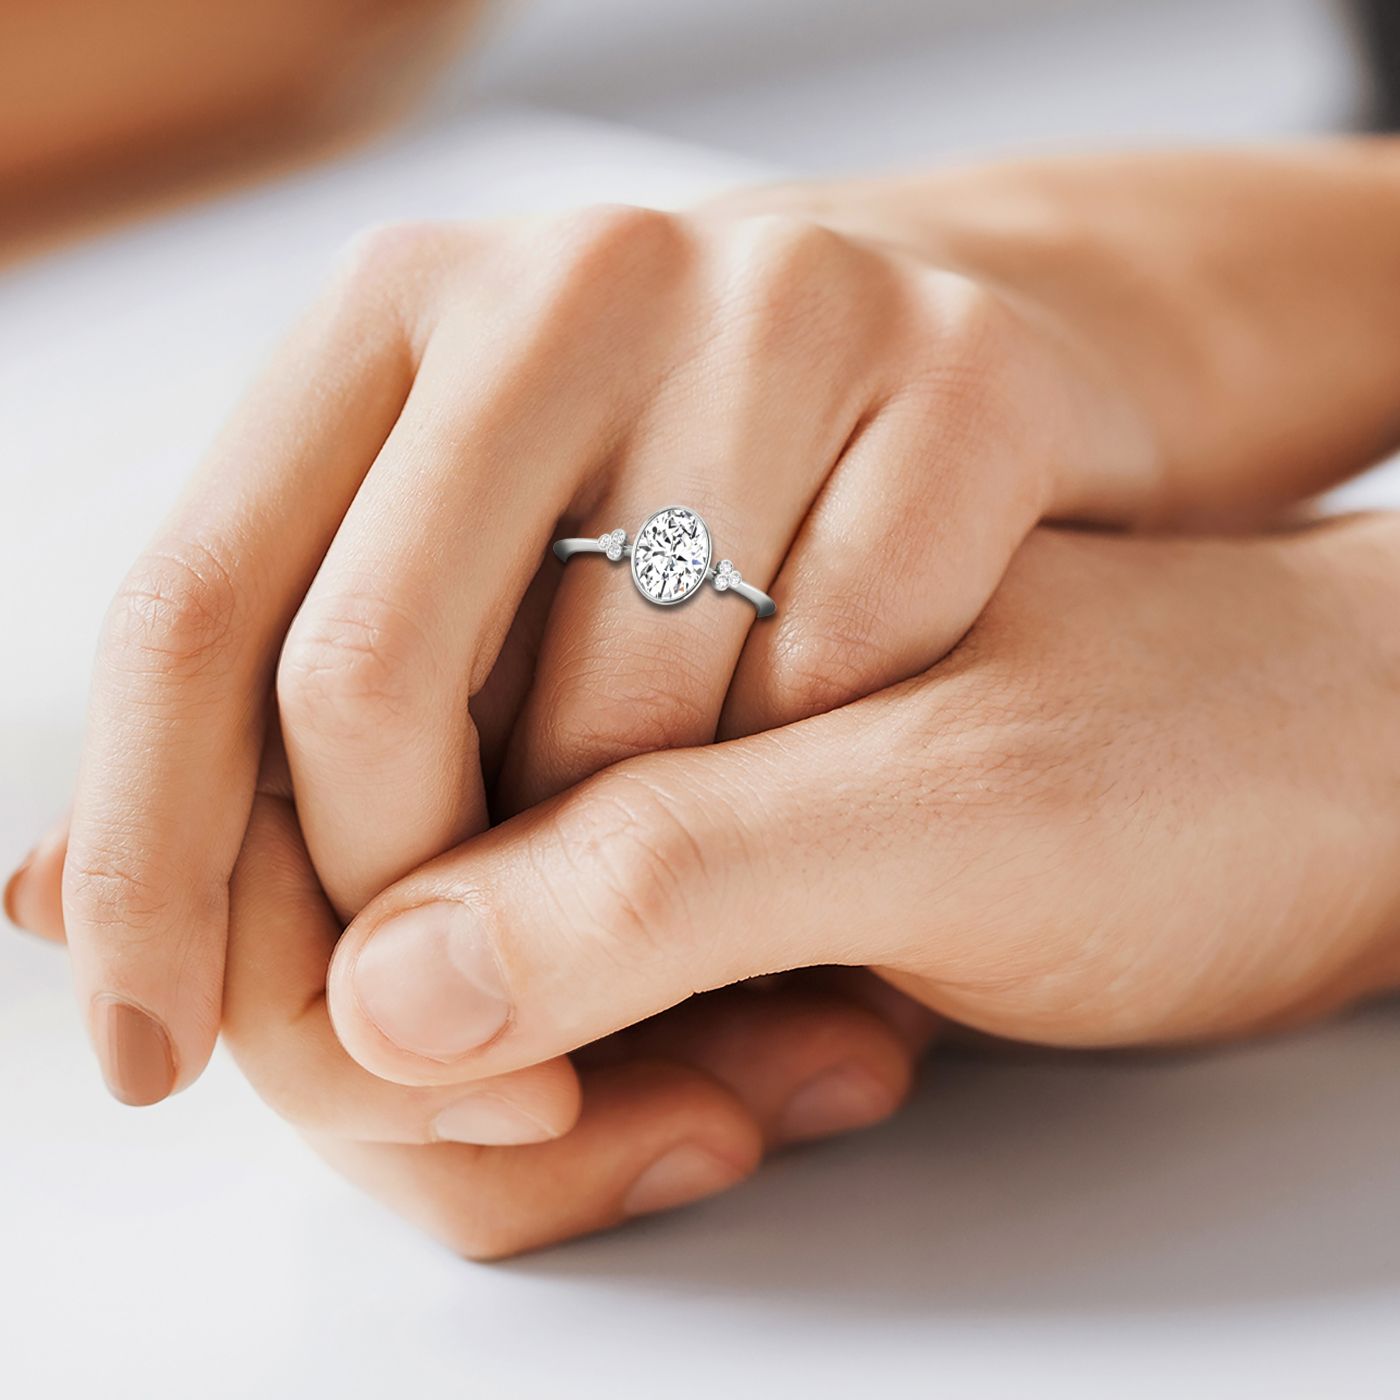 18kw Bezel Set Oval Engagement Ring With 6 Clover Bezel Set Round Diamonds On Shank